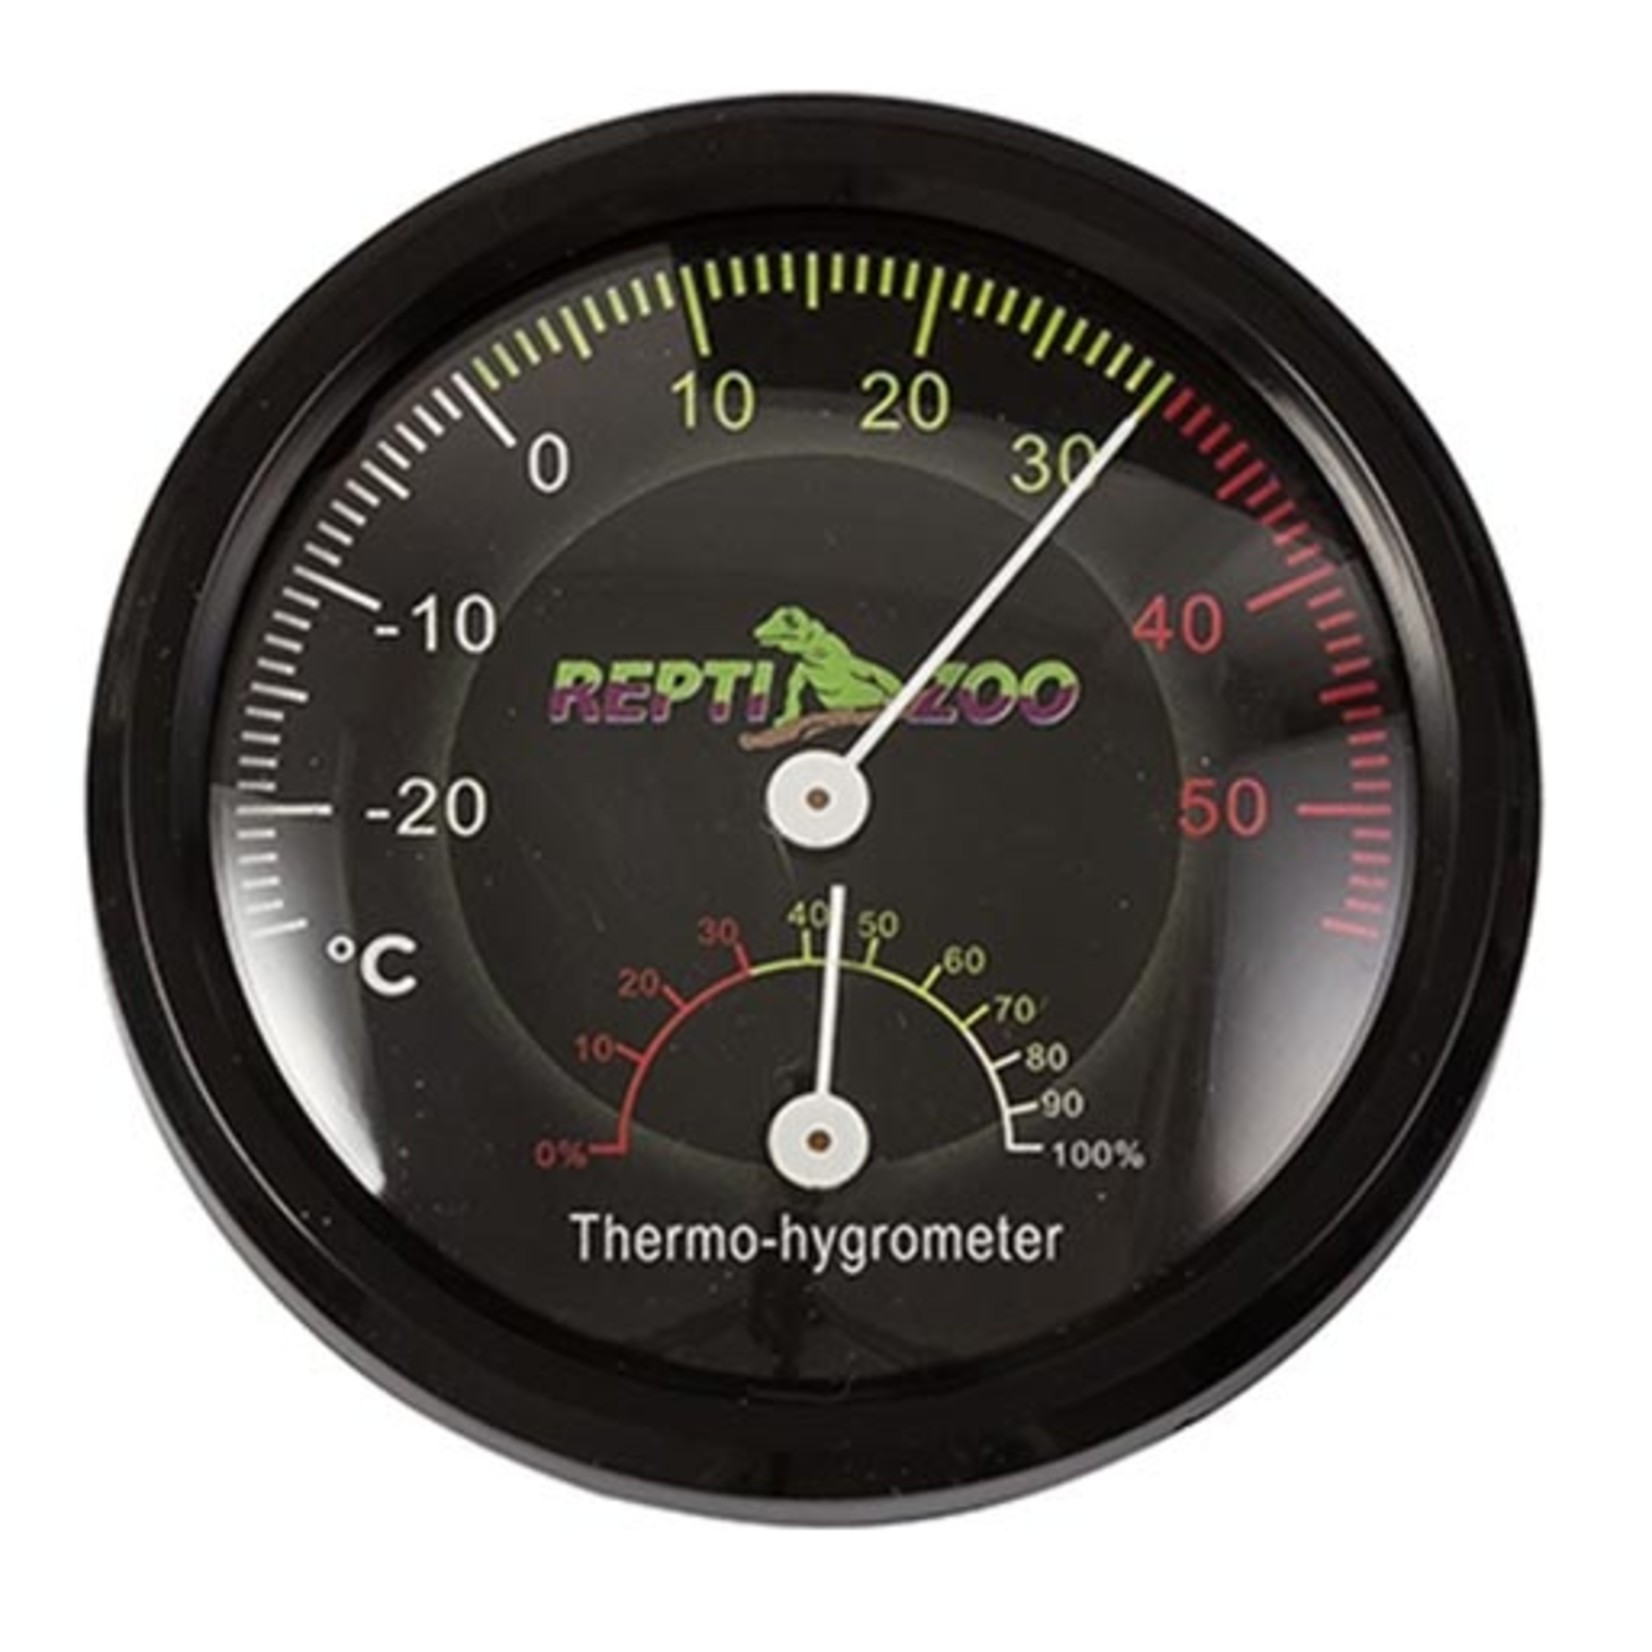 ReptiZoo Thermometre + Hygrometre a fixer